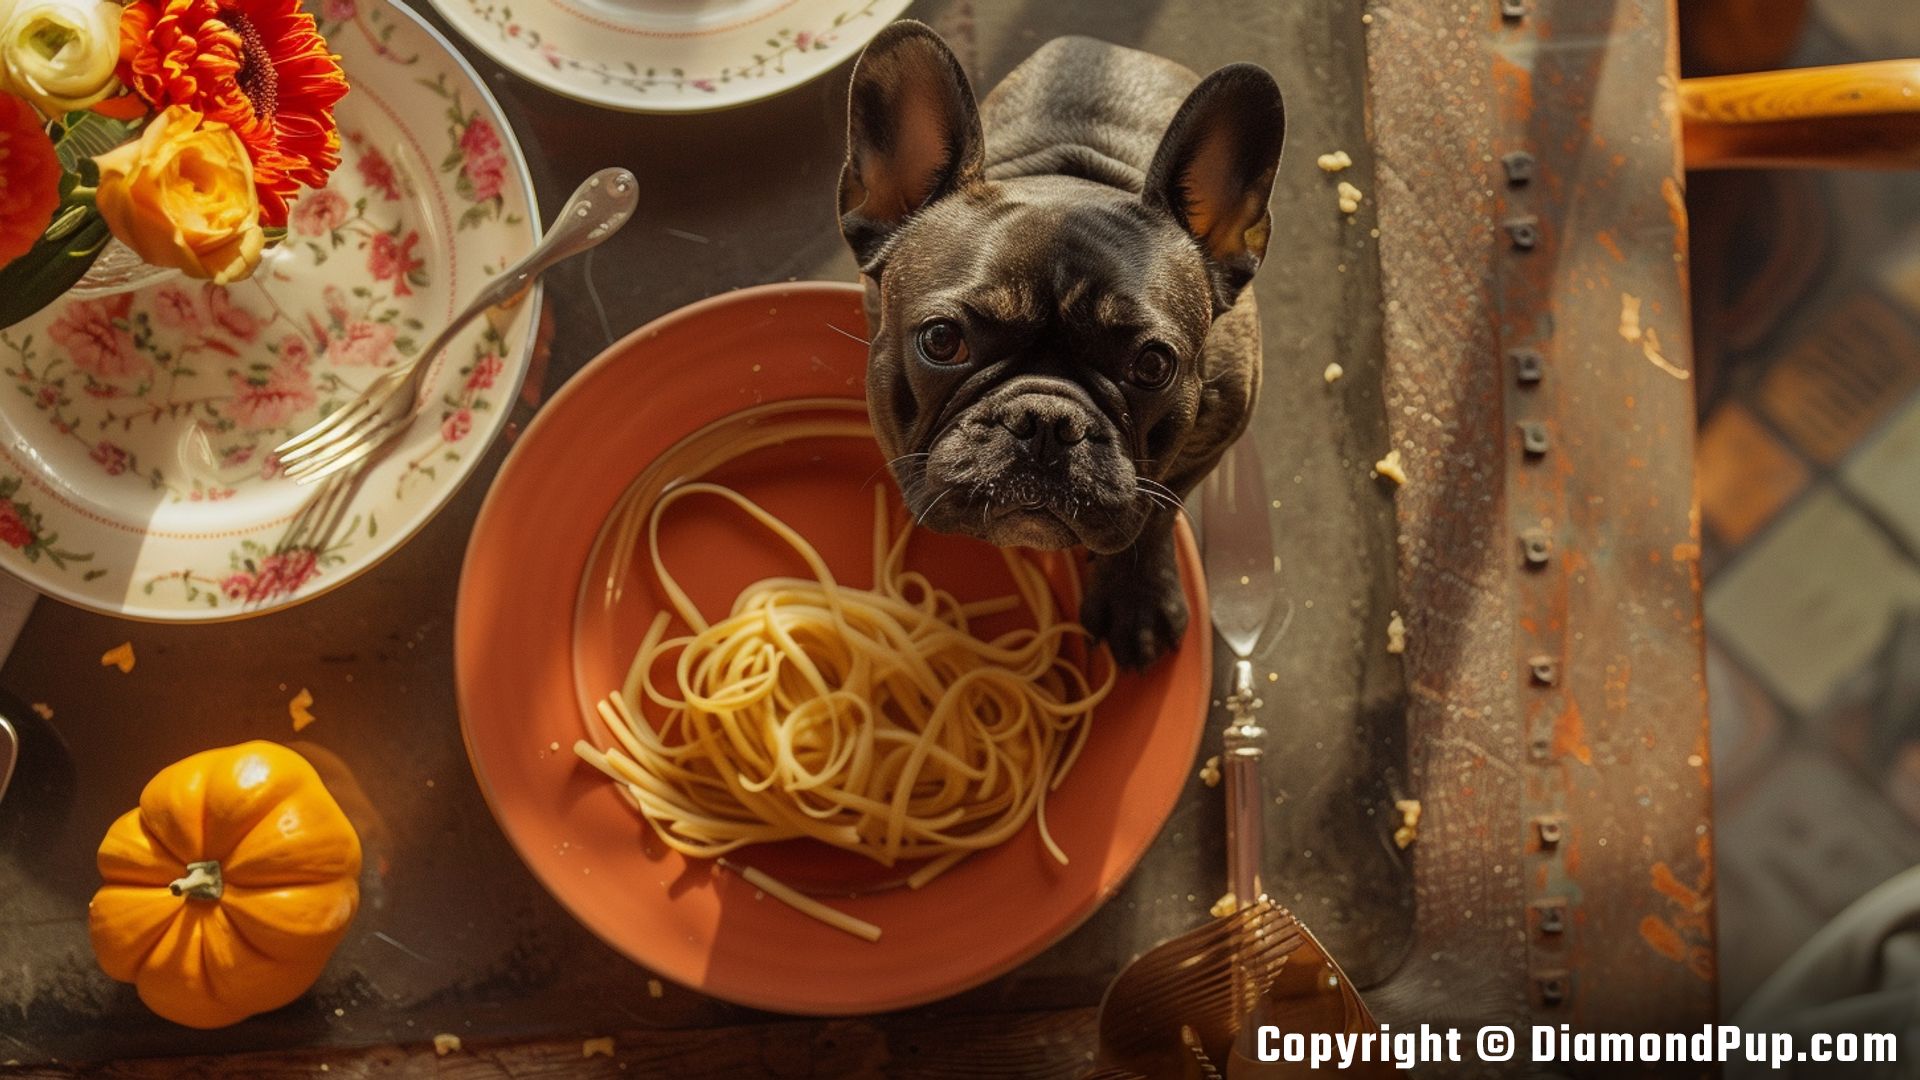 Photograph of an Adorable French Bulldog Eating Pasta